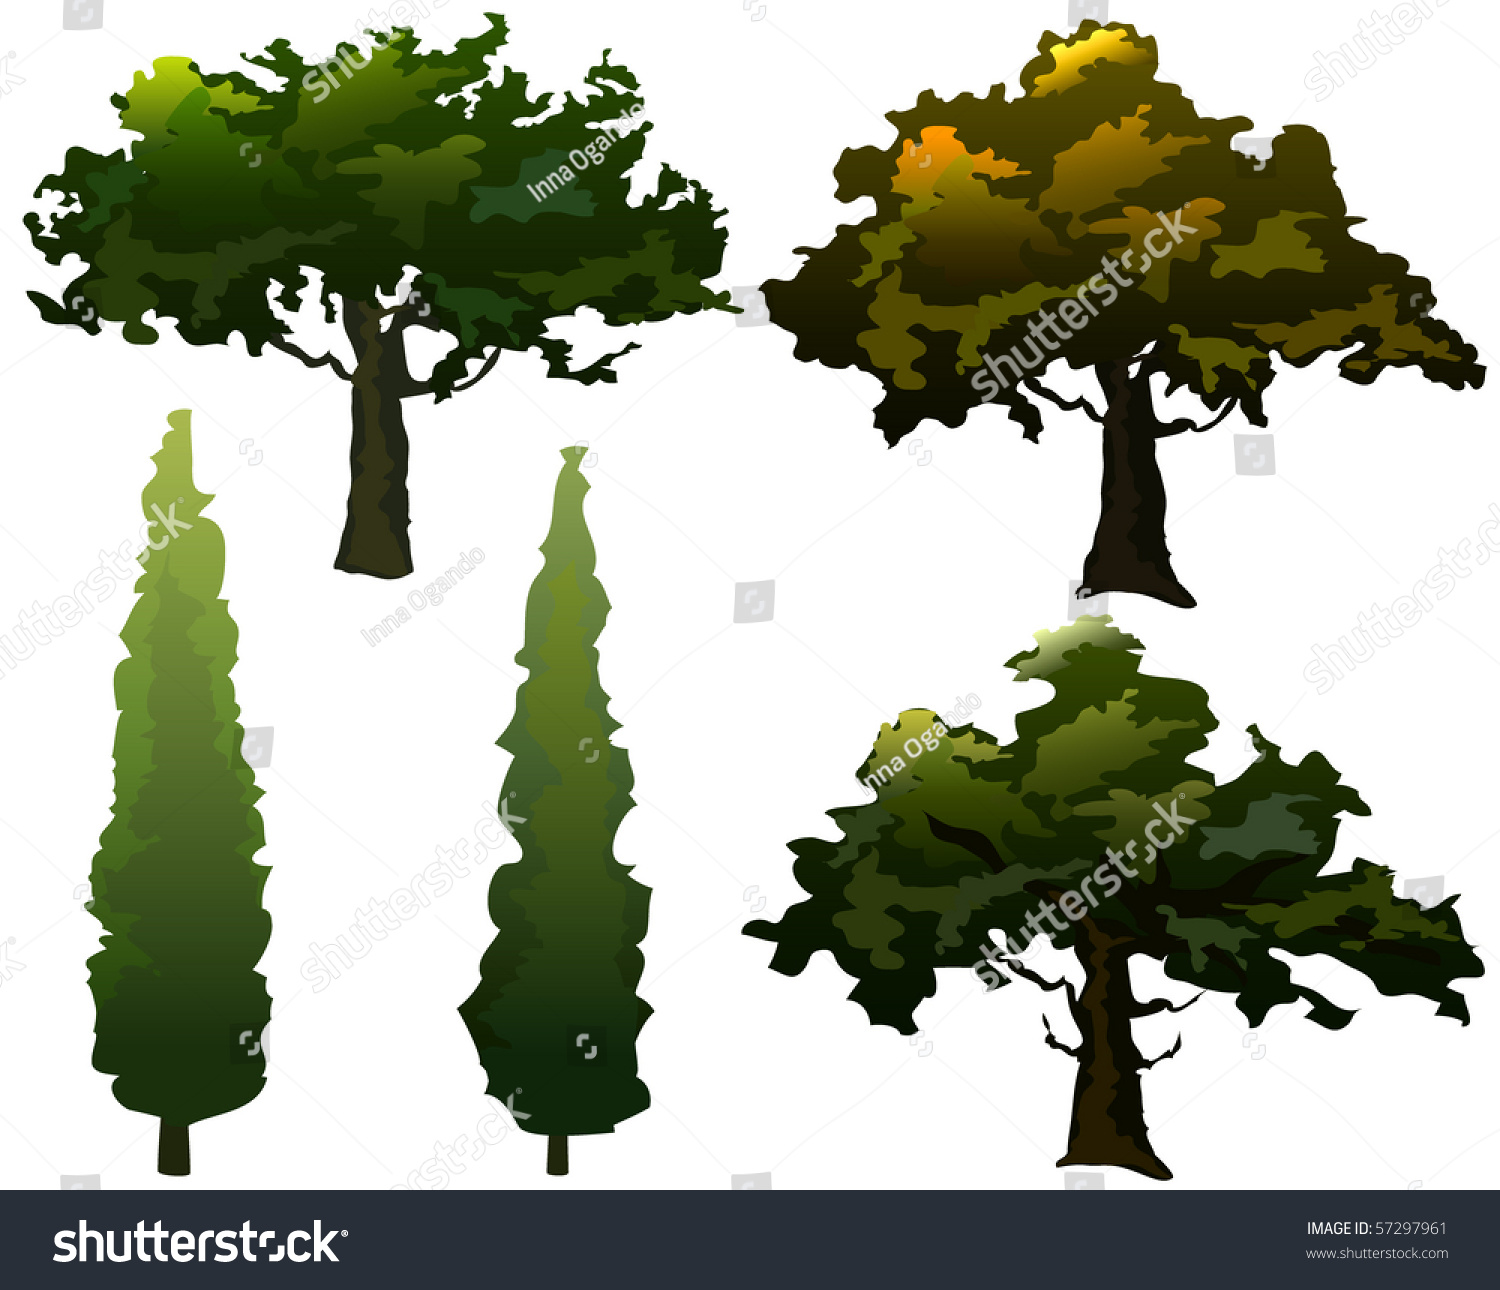 clip art cypress tree - photo #34